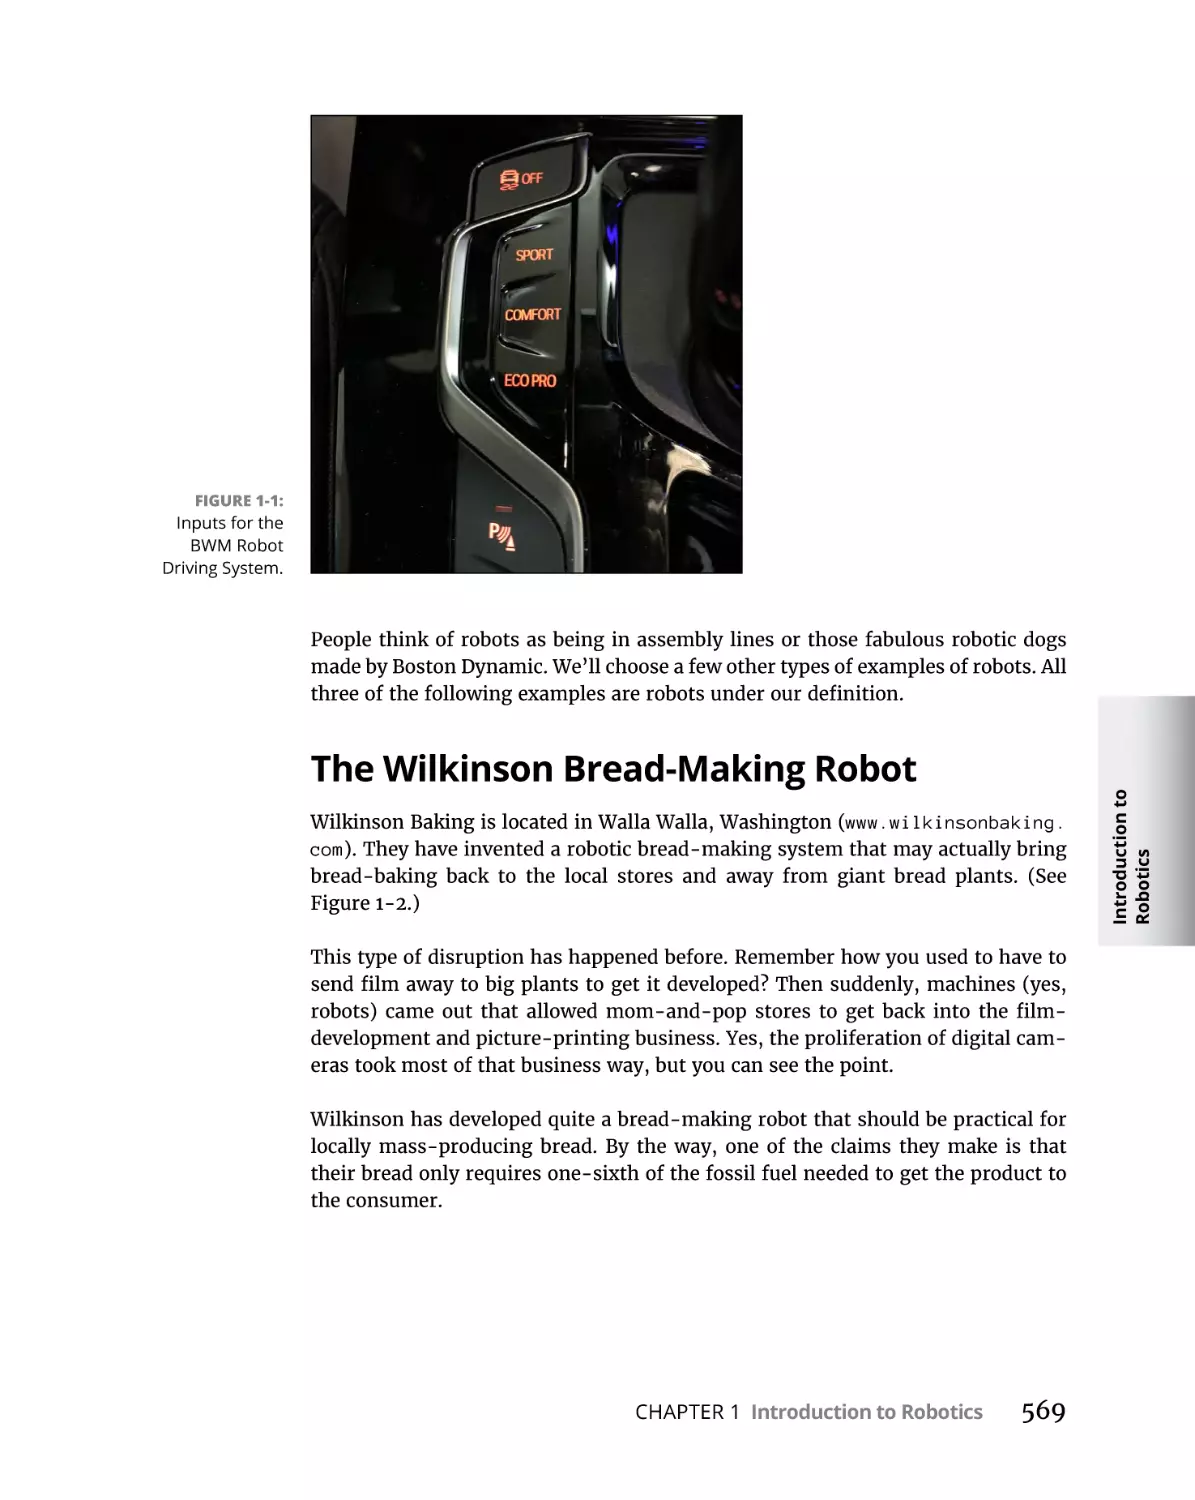 The Wilkinson Bread-Making Robot